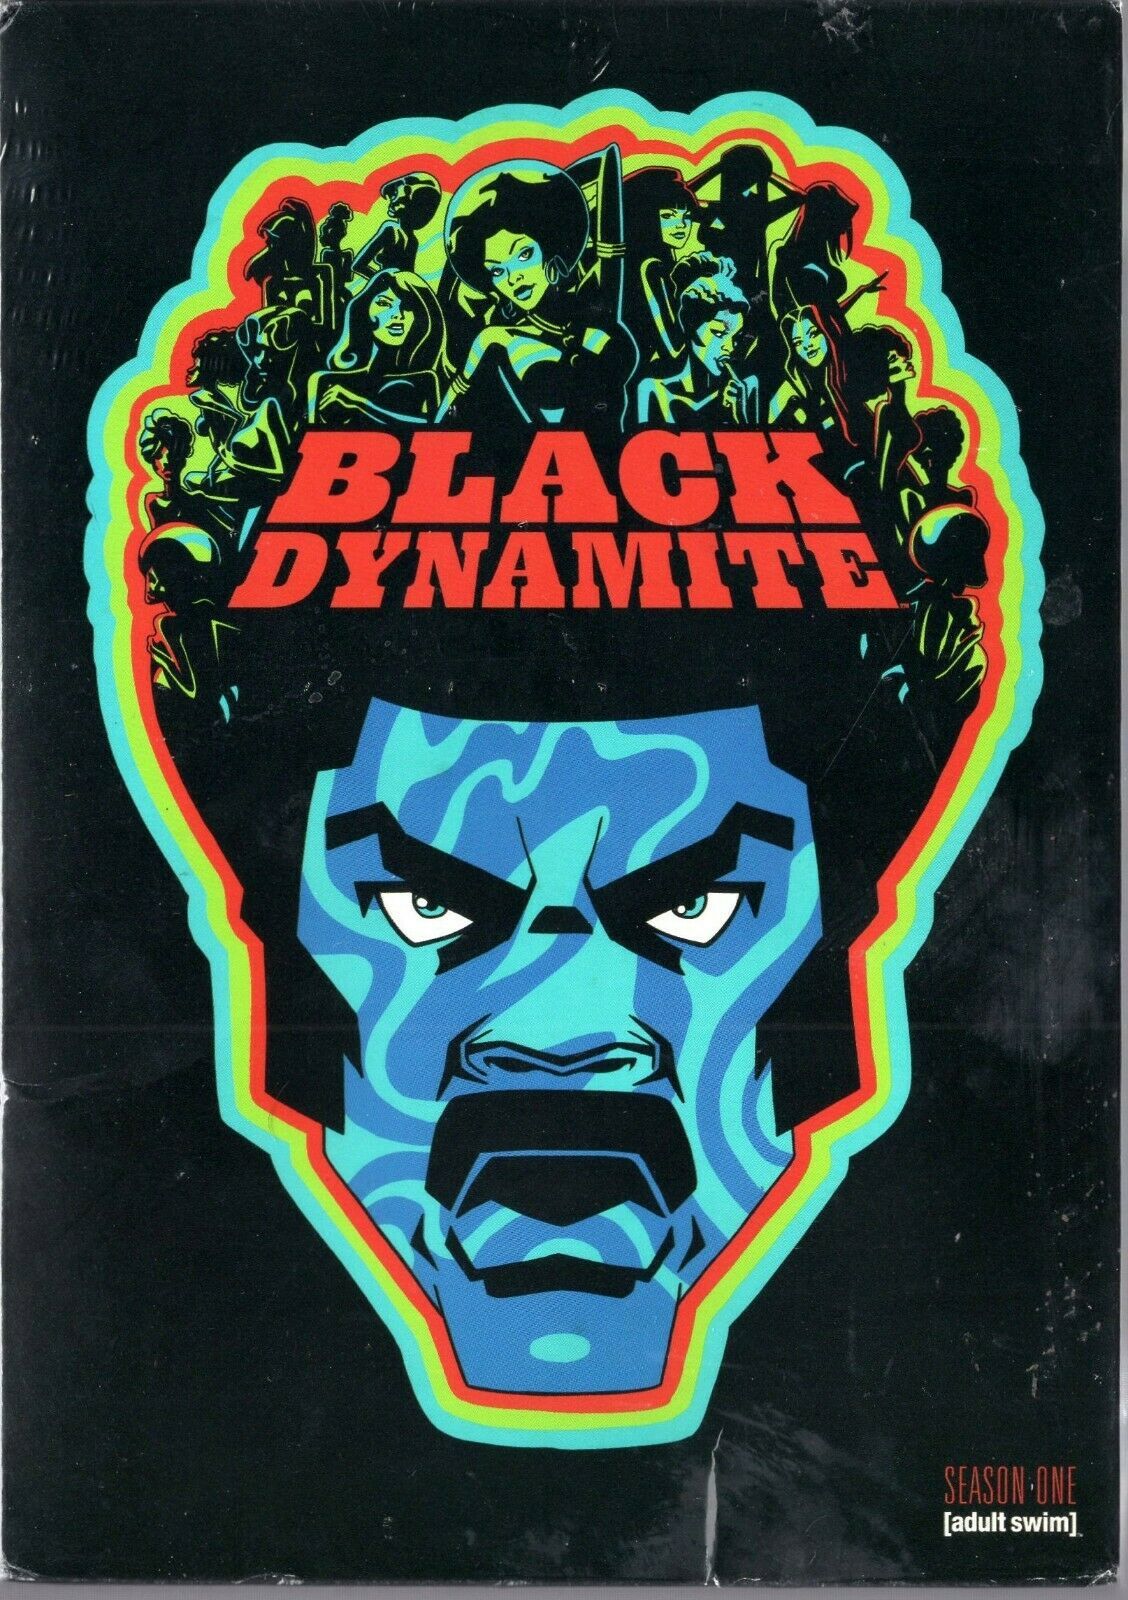 Primary image for Black Dynamite: Season One (DVD, 2014, 2-Disc Set)  BRAND NEW